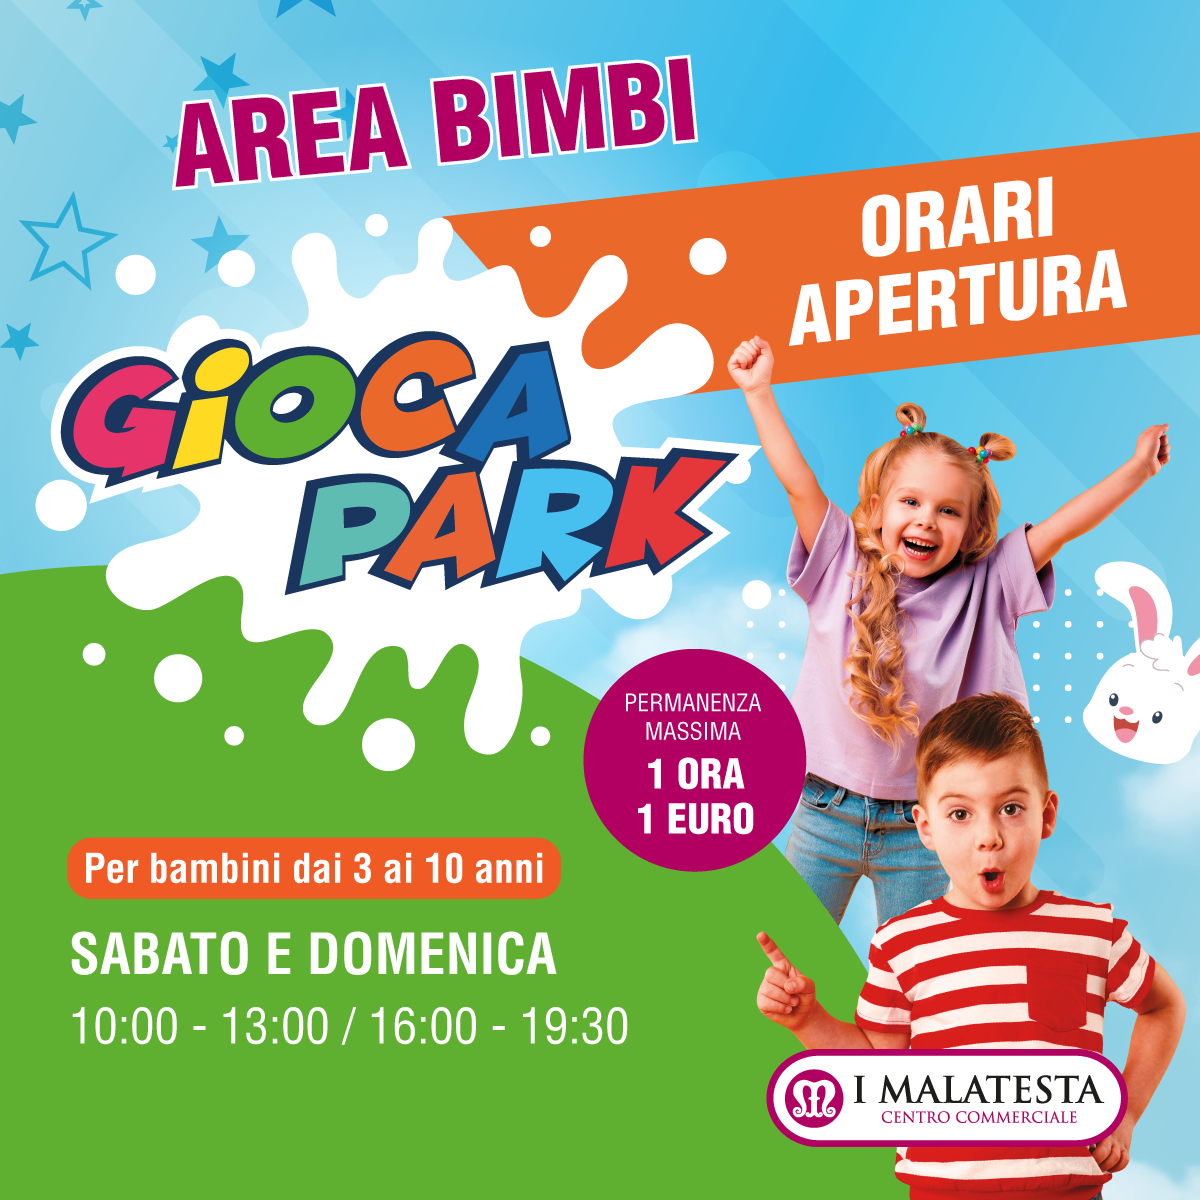 Area bimbi - Centro commerciale I Malatesta - Rimini